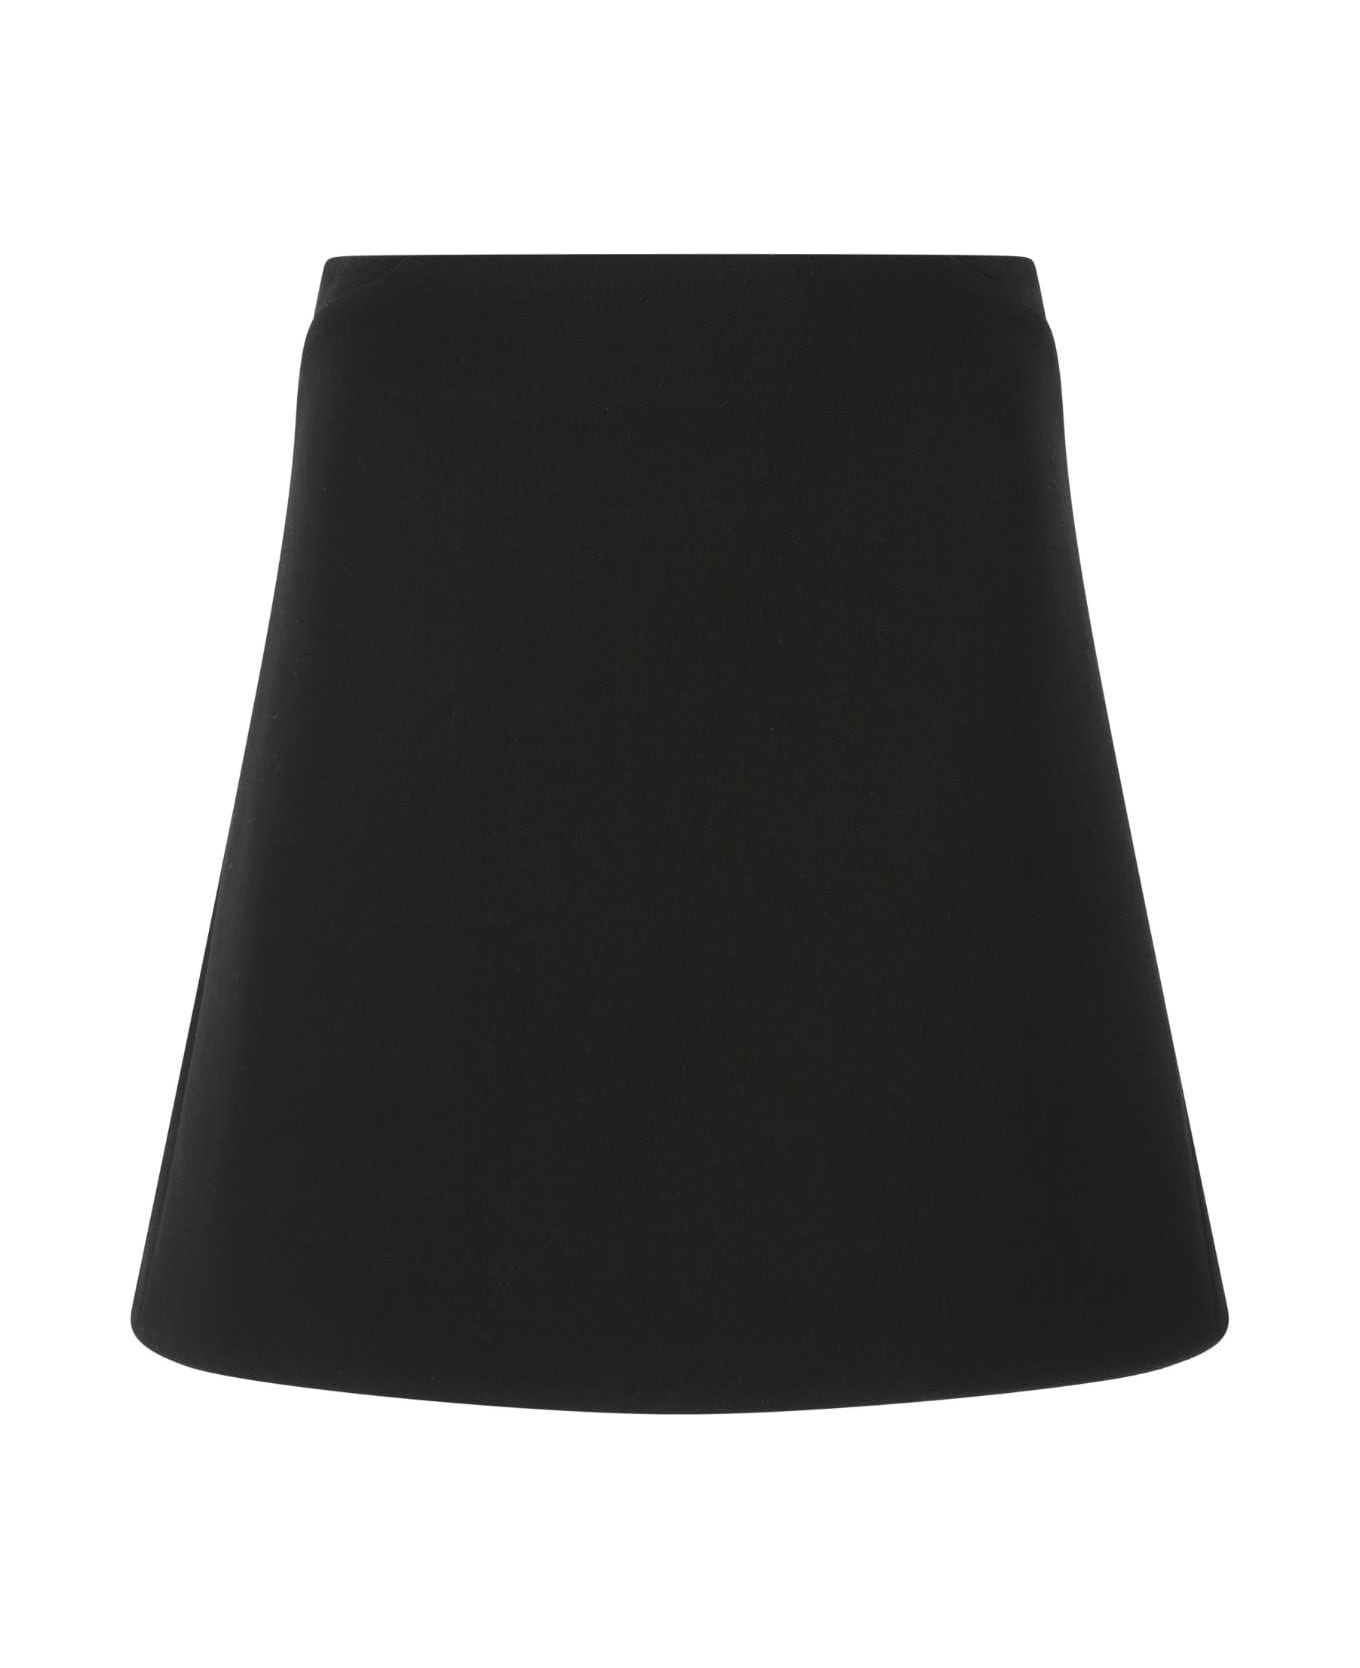 Bottega Veneta Black Stretch Wool Blend Mini Skirt - 1000 スカート